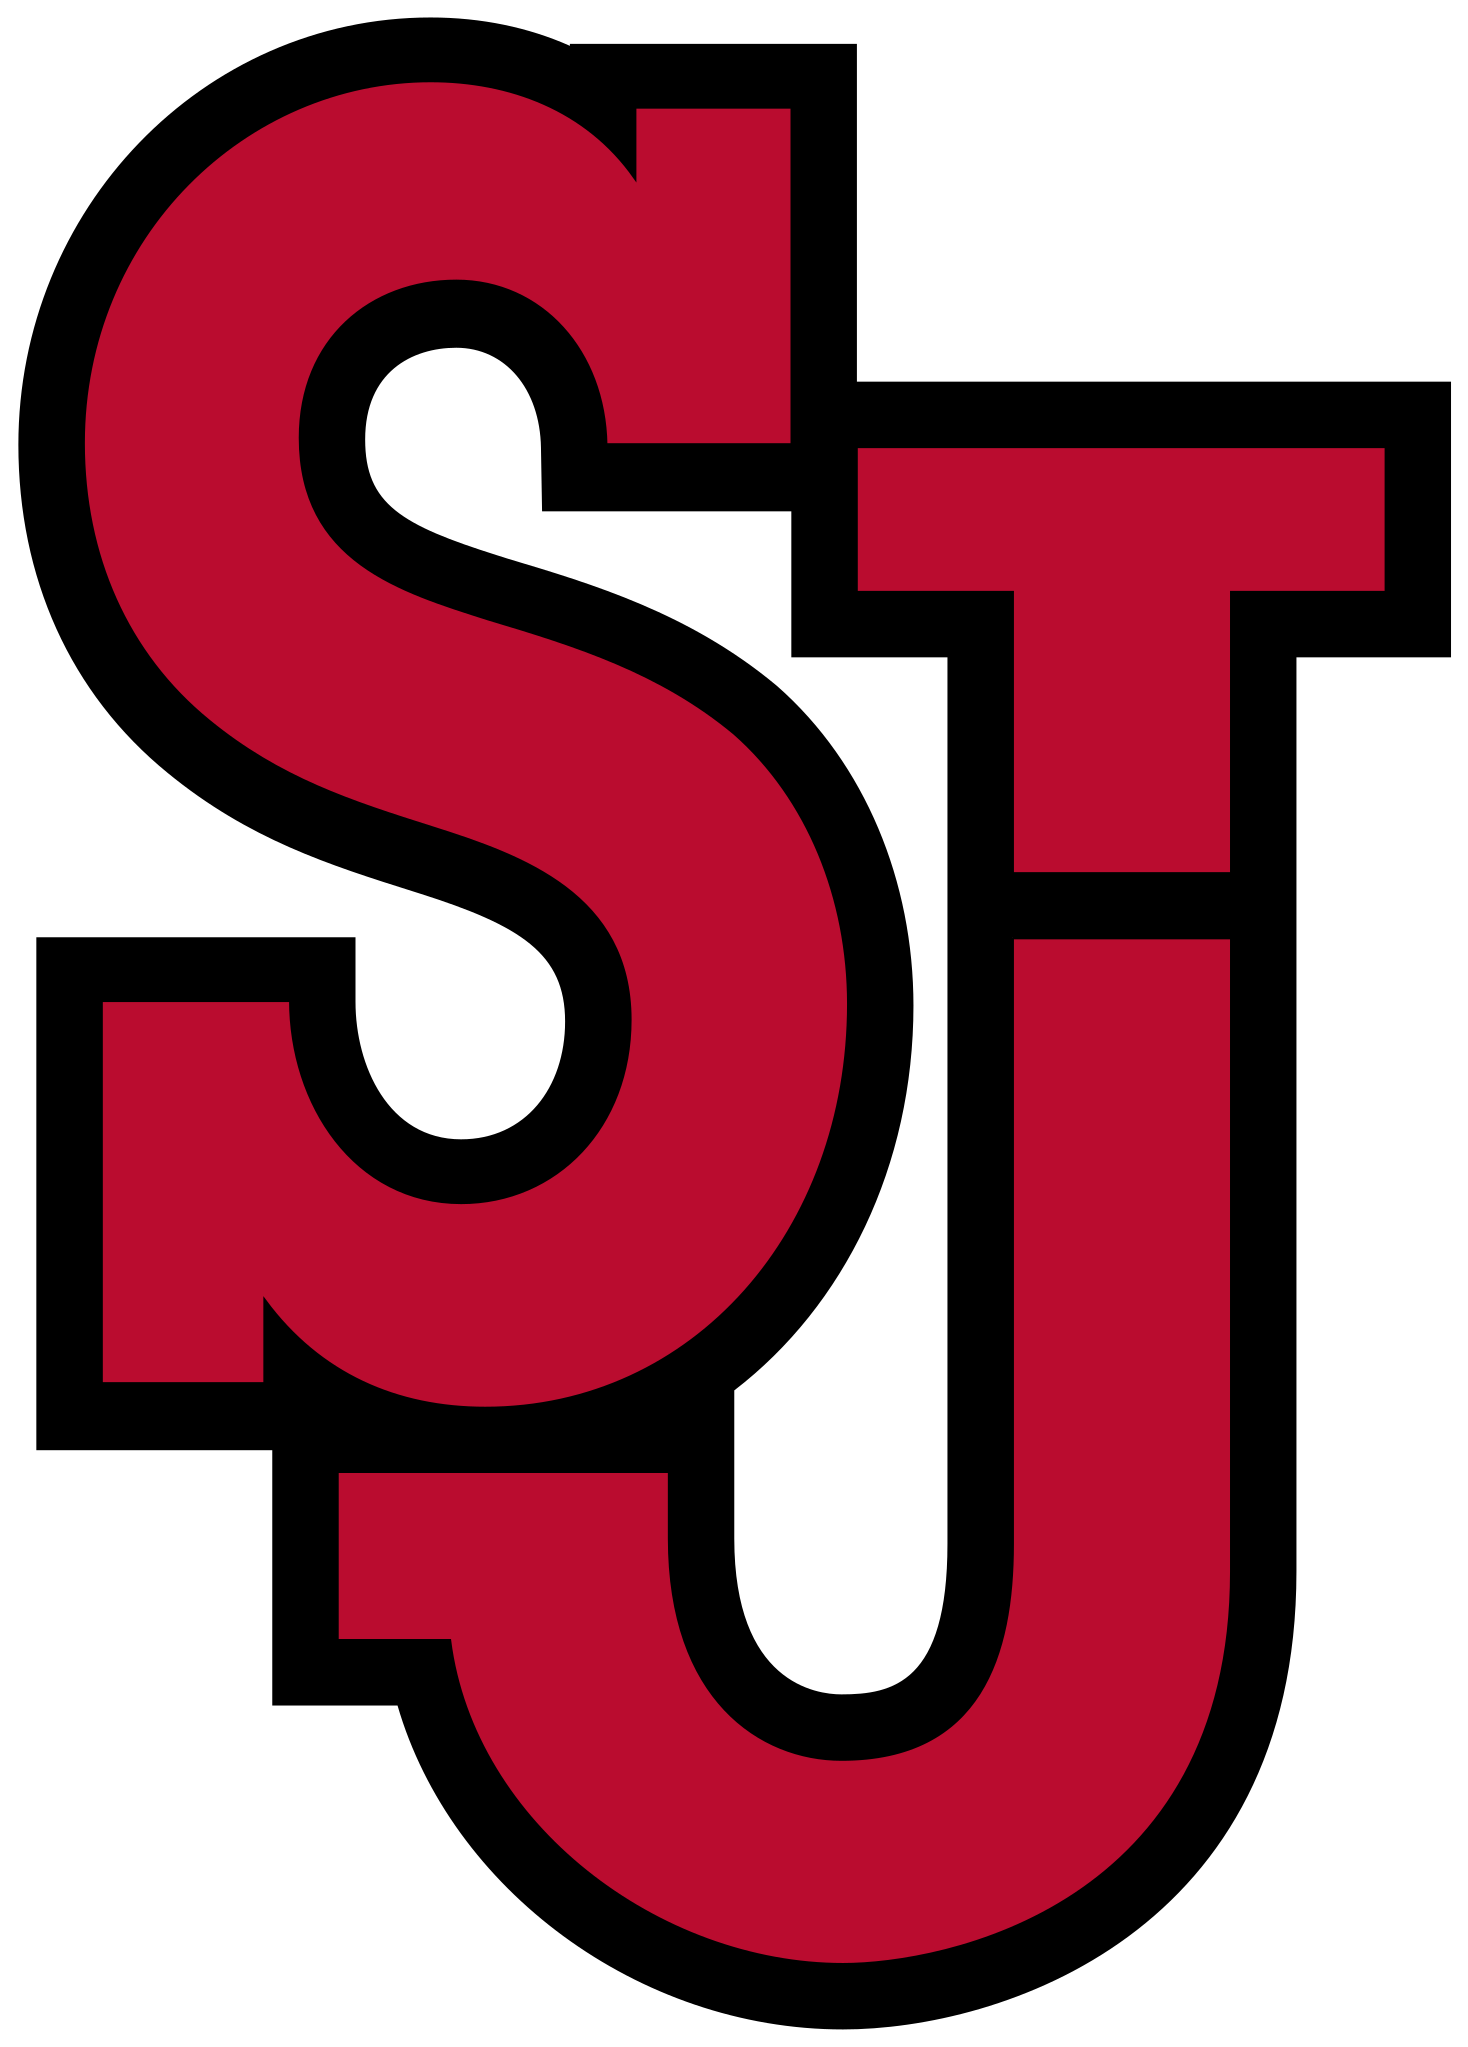 File:St. John's Red Storm logo.svg - Wikipedia